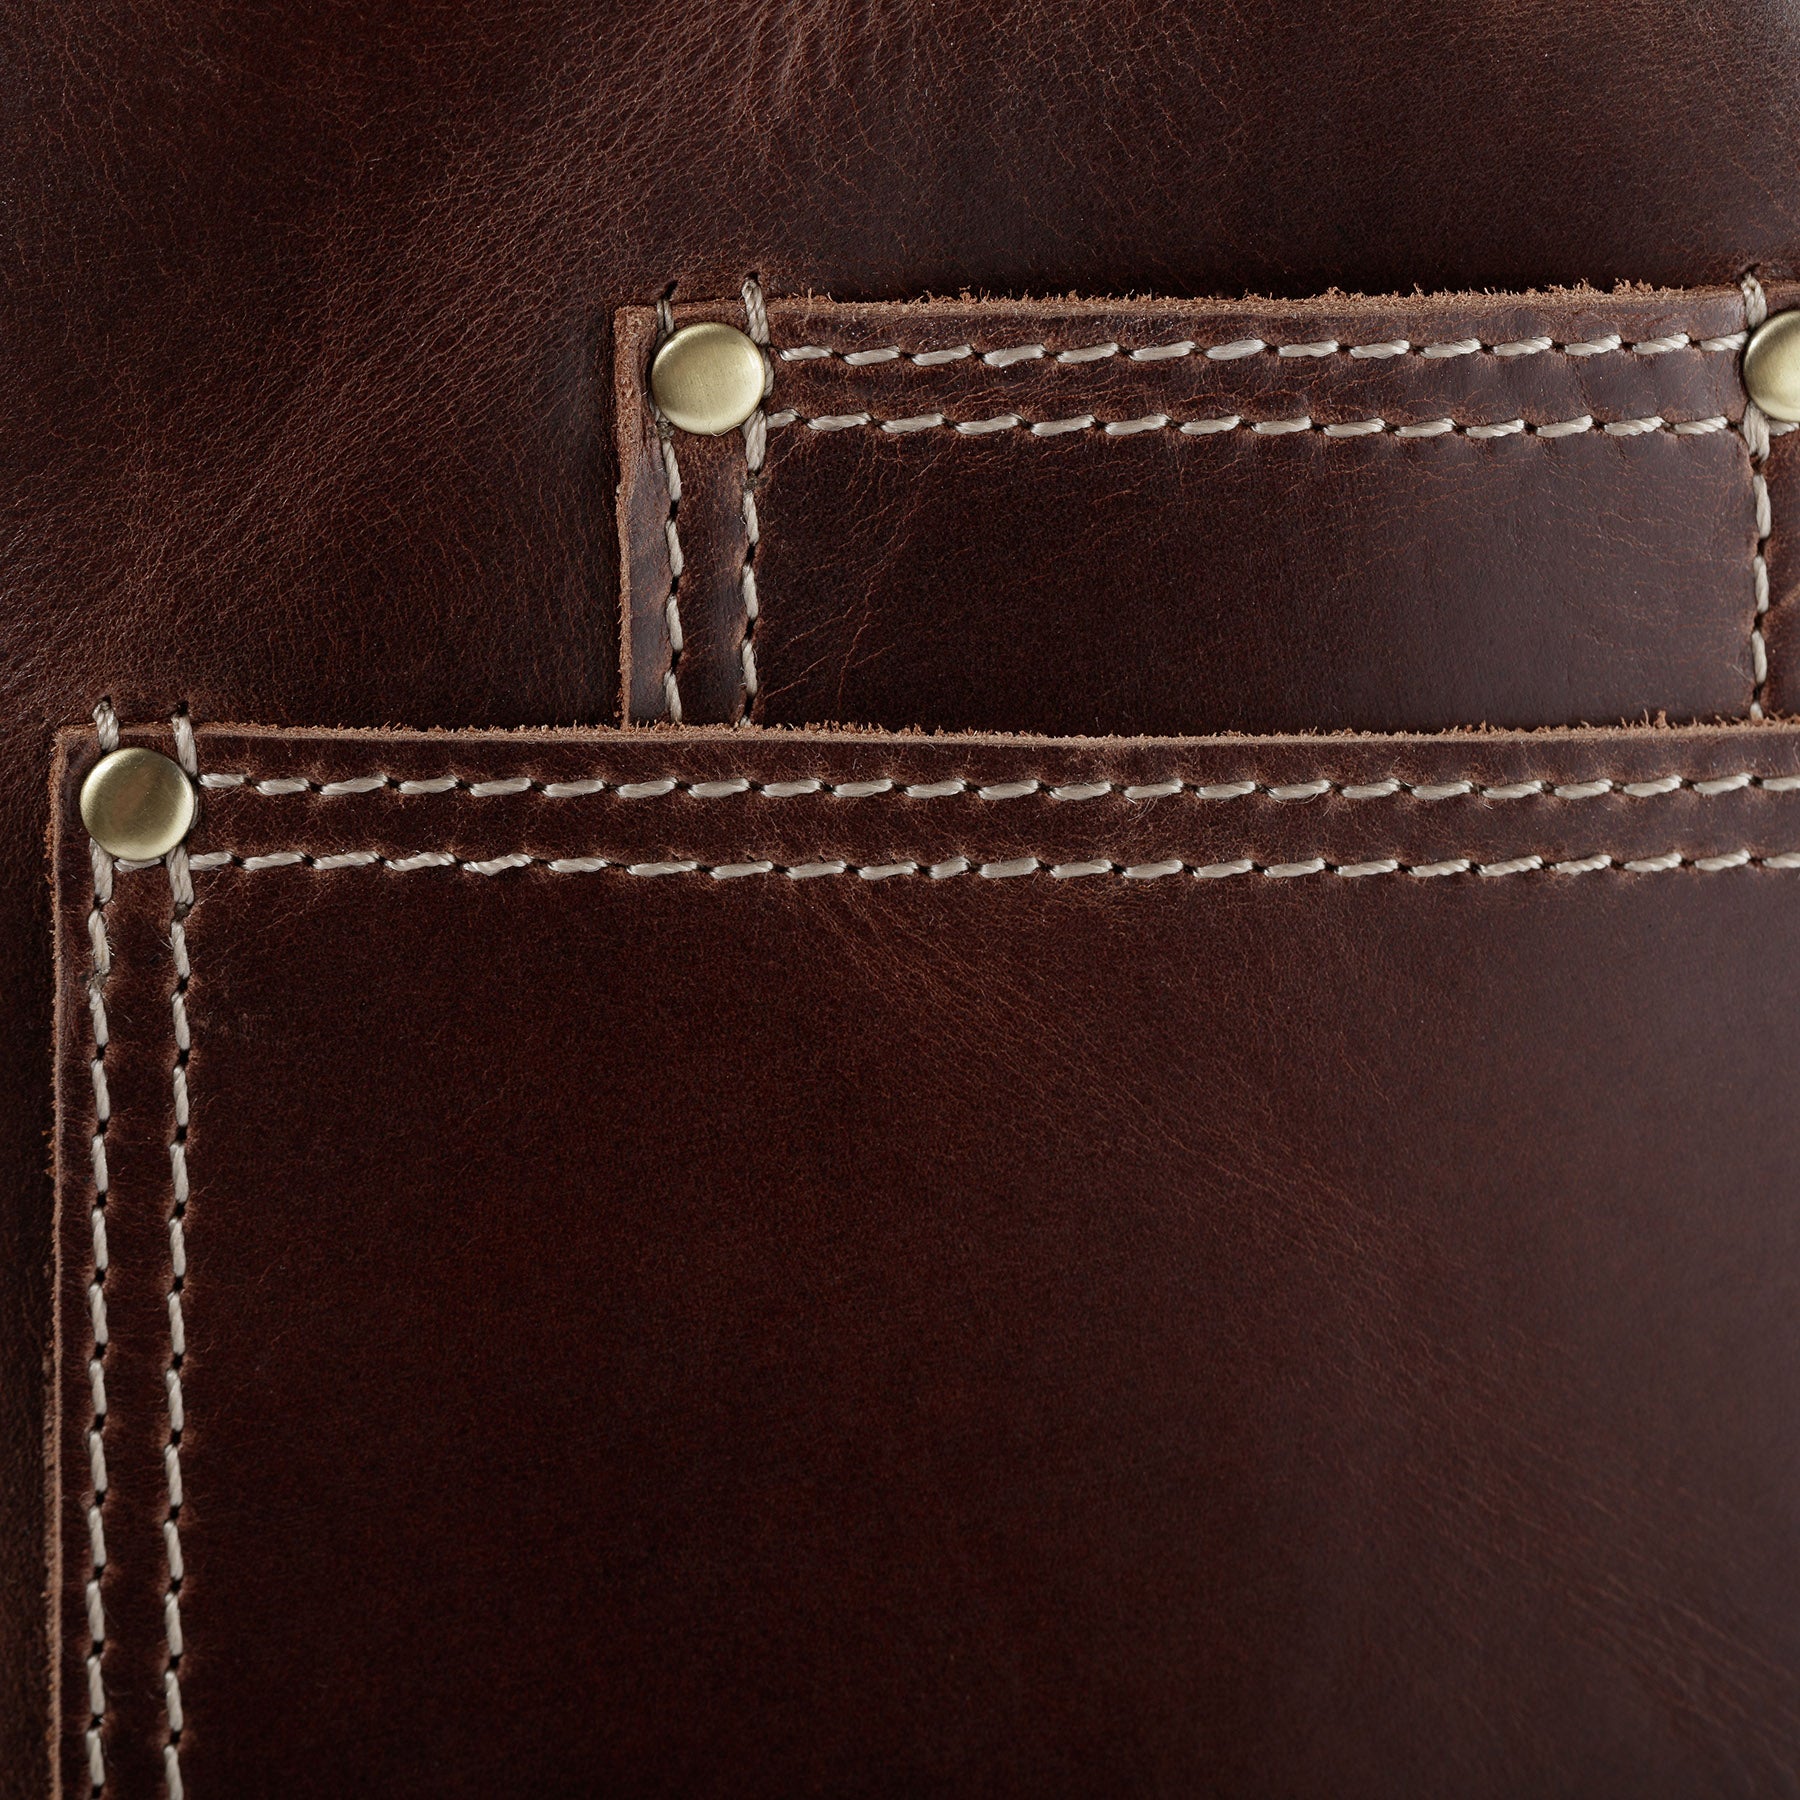 Leather apron DEAN natural leather brown-cognac